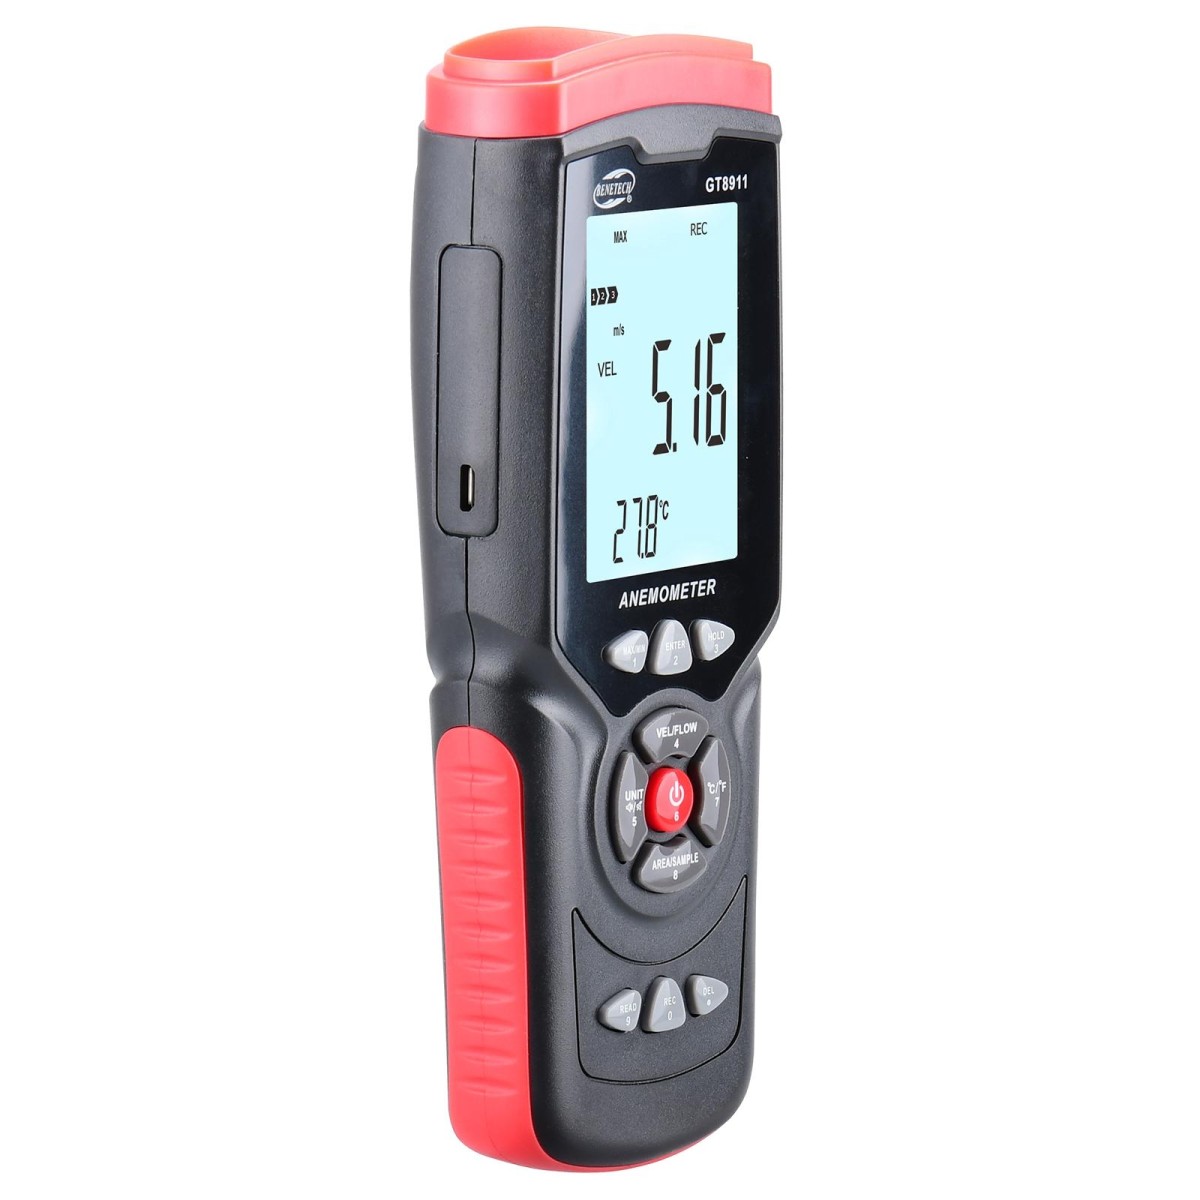 BENETECH GT8911 Handheld Digital LCD Hot Wire Anemometer